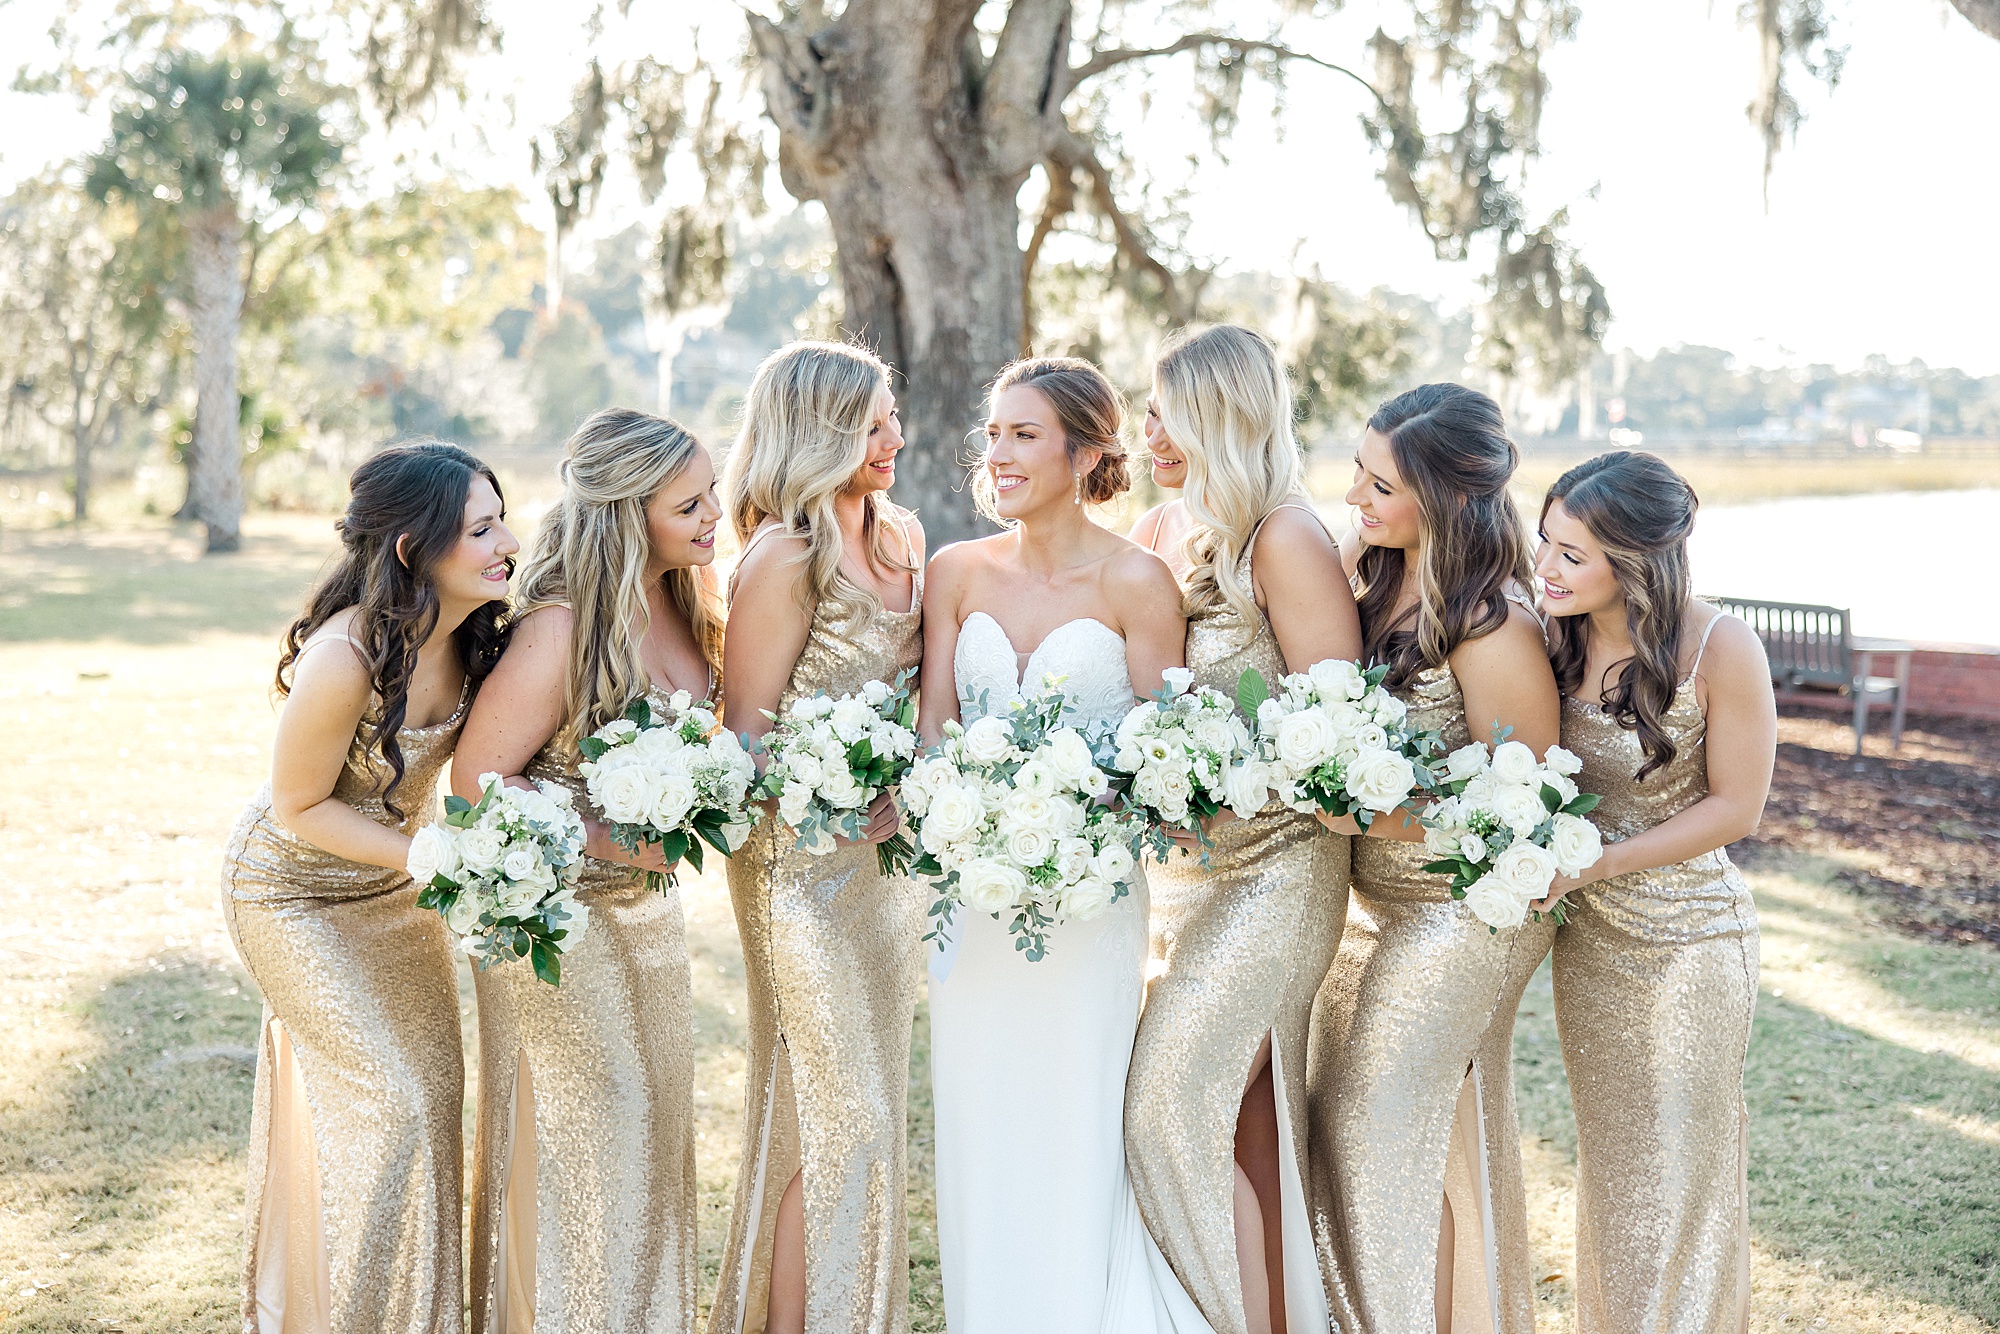 bridesmaids gather around bride before Romantic South Carolina Wedding ceremony